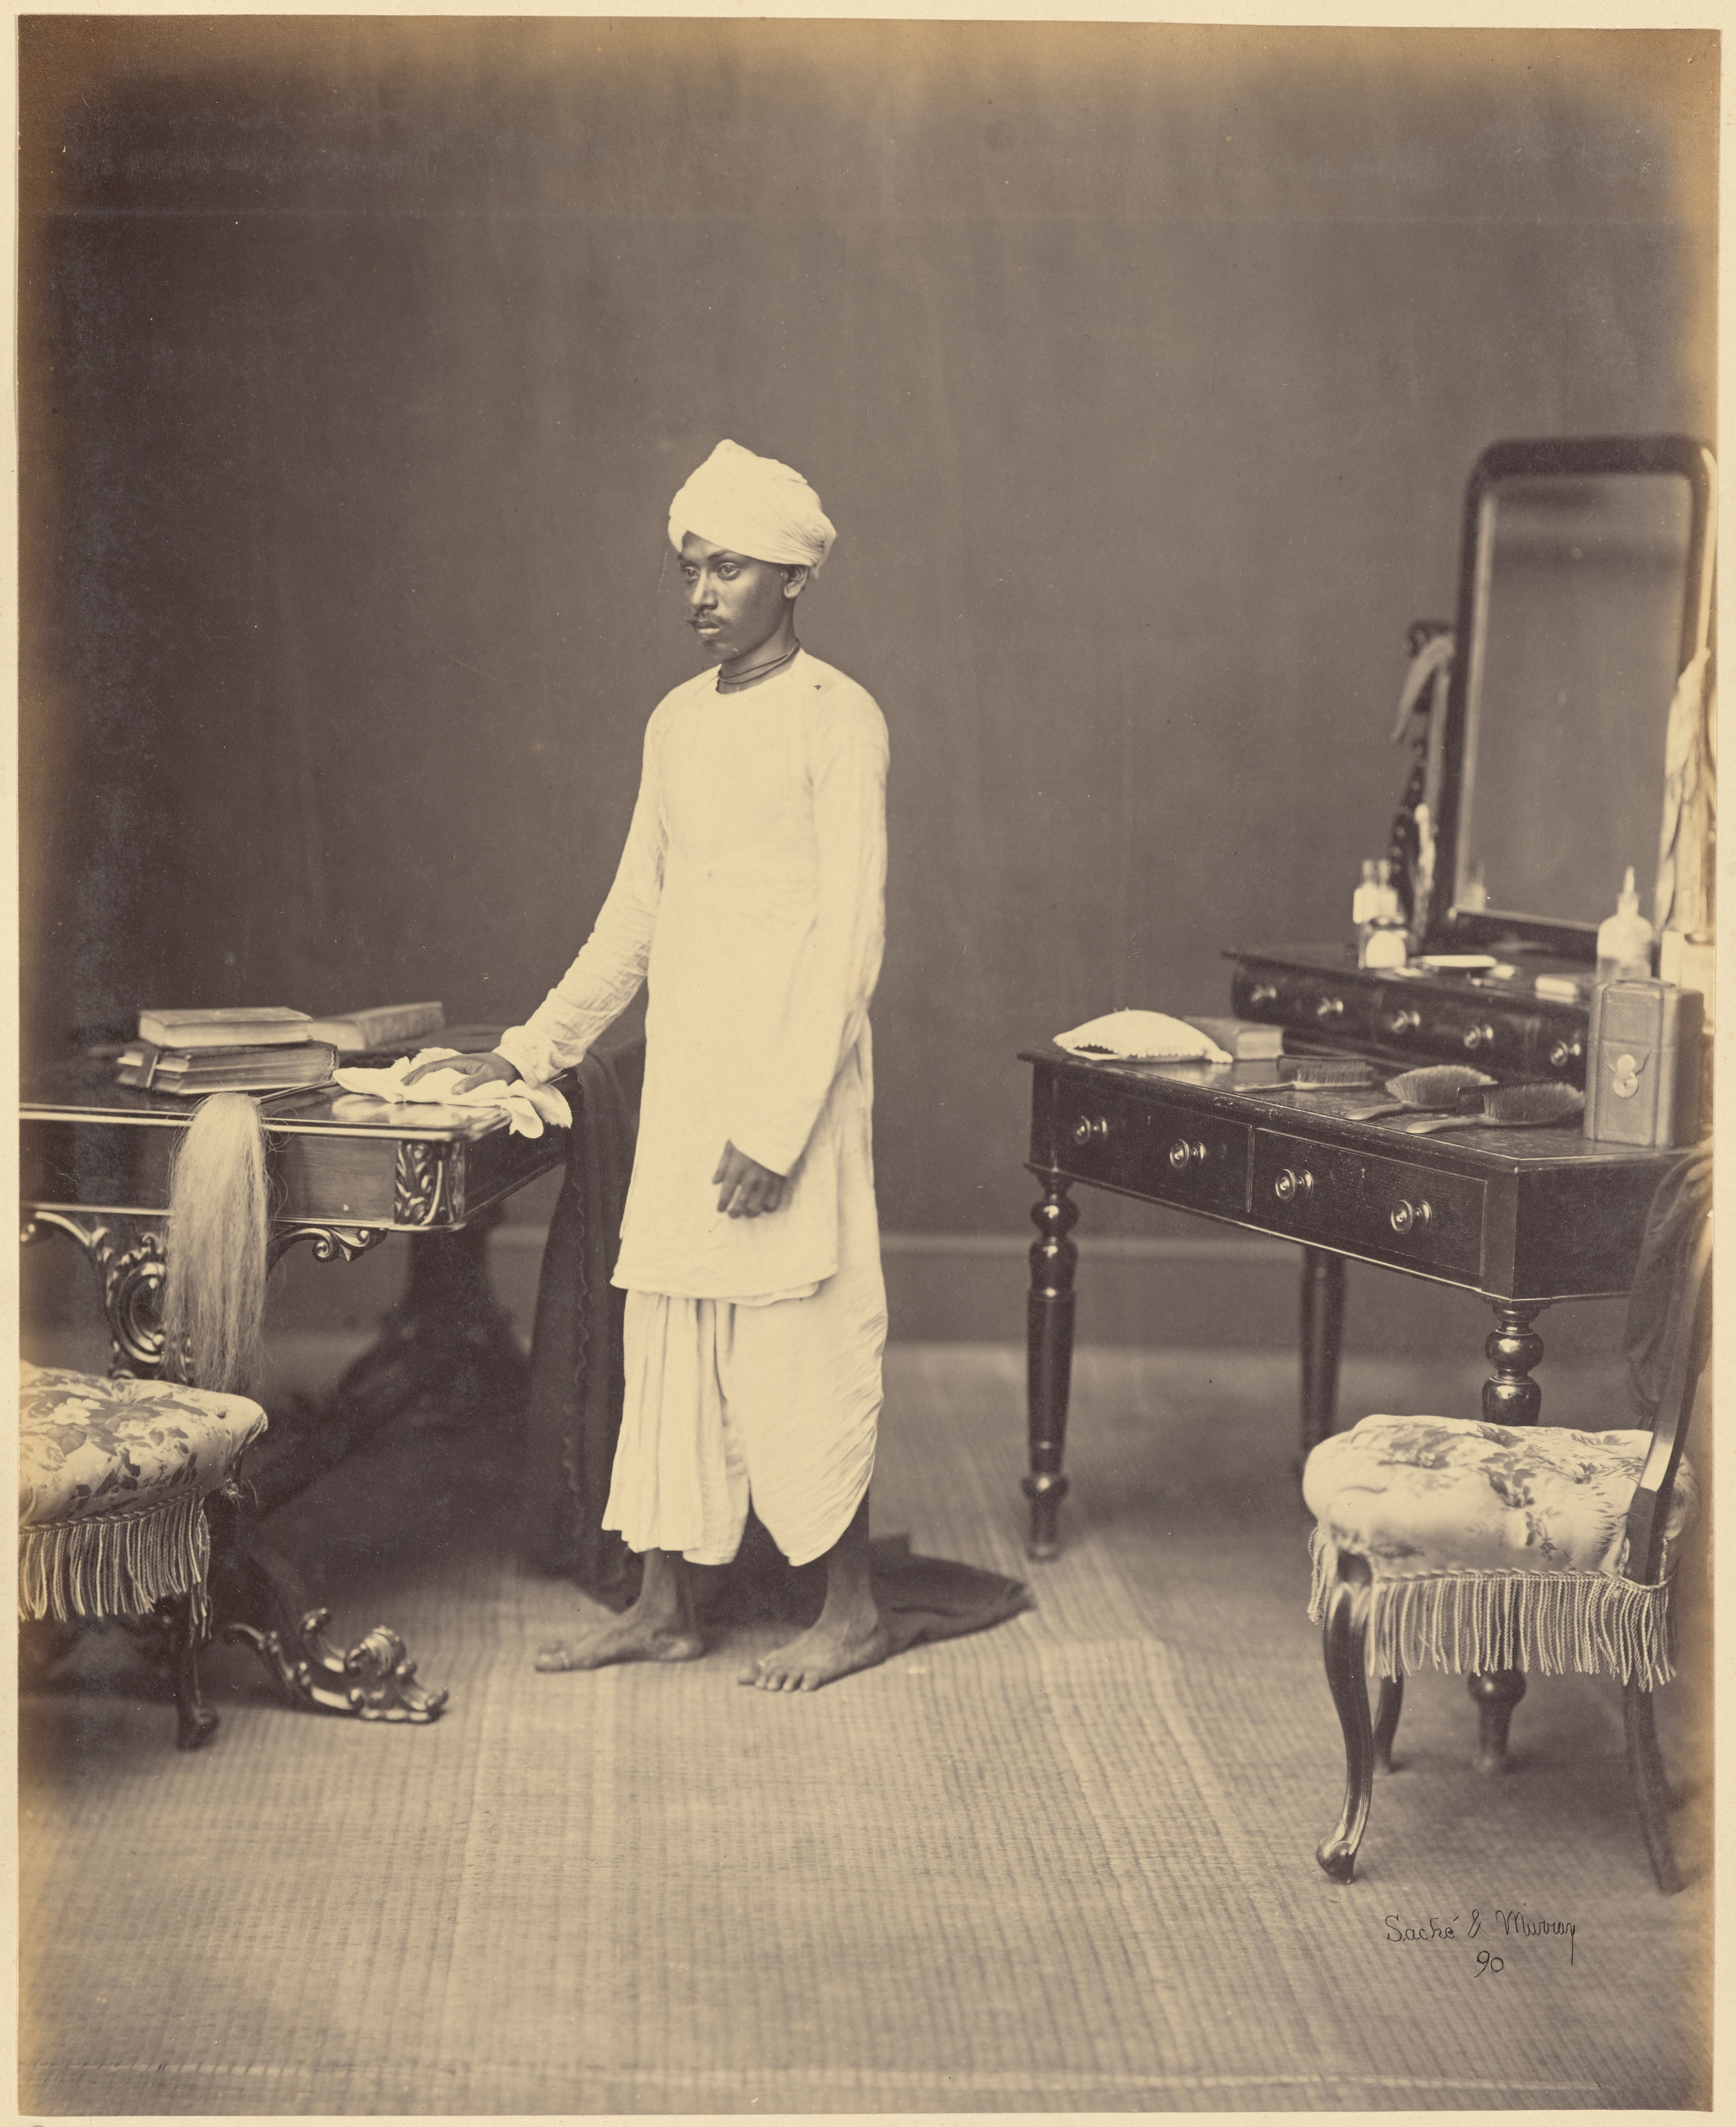 Studio Portrait of a Man as a Bearer, or a Head Servant - Circa 1860s